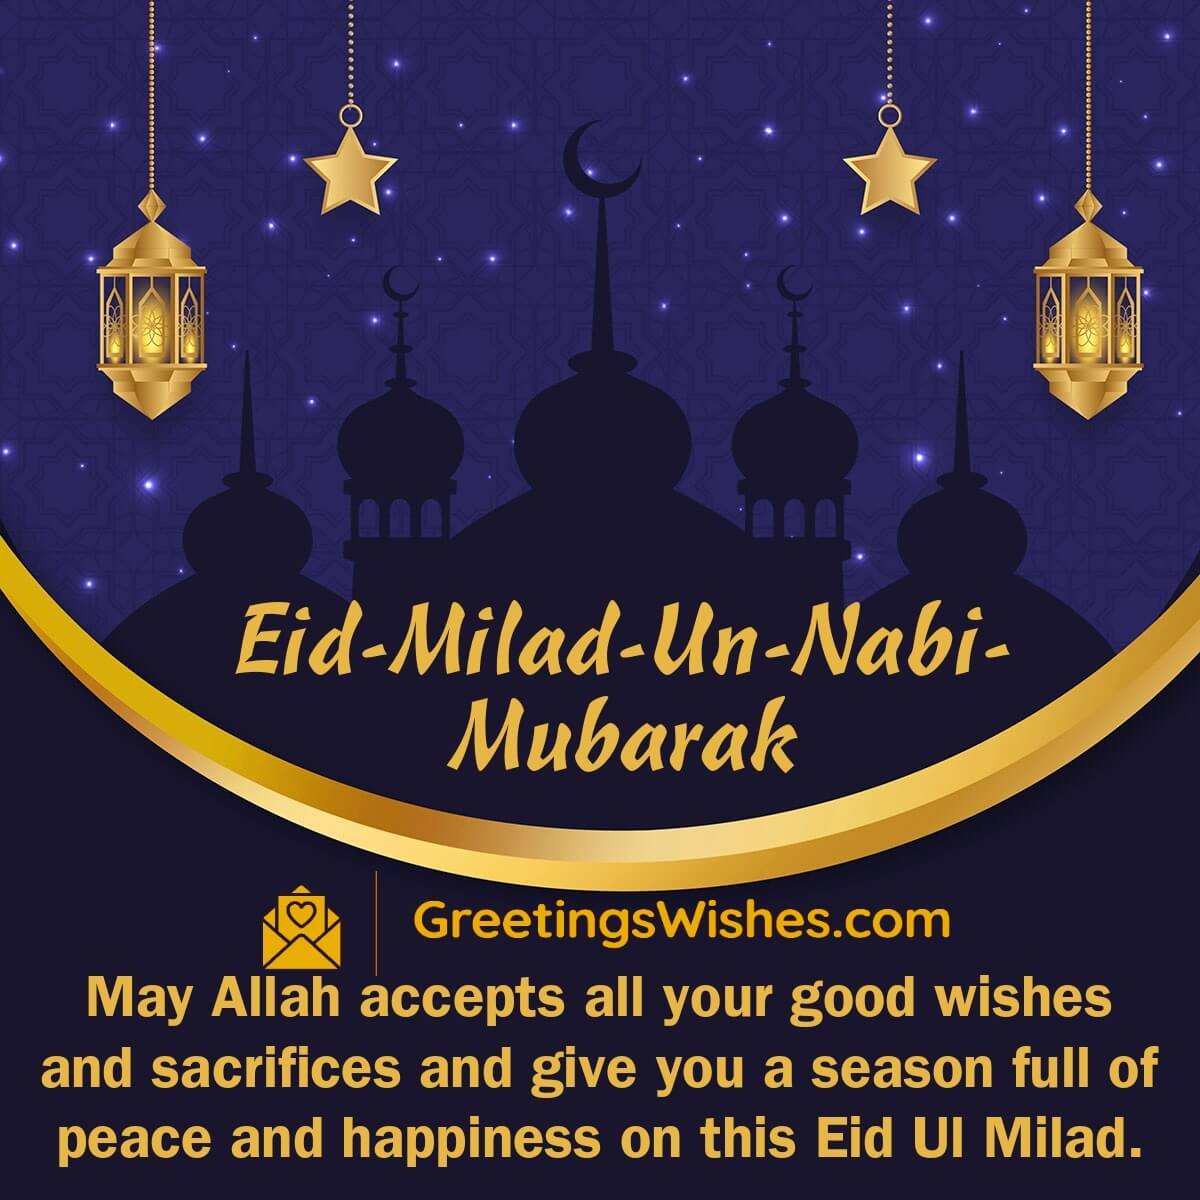 Eid Milad Un Nabi Mubarak